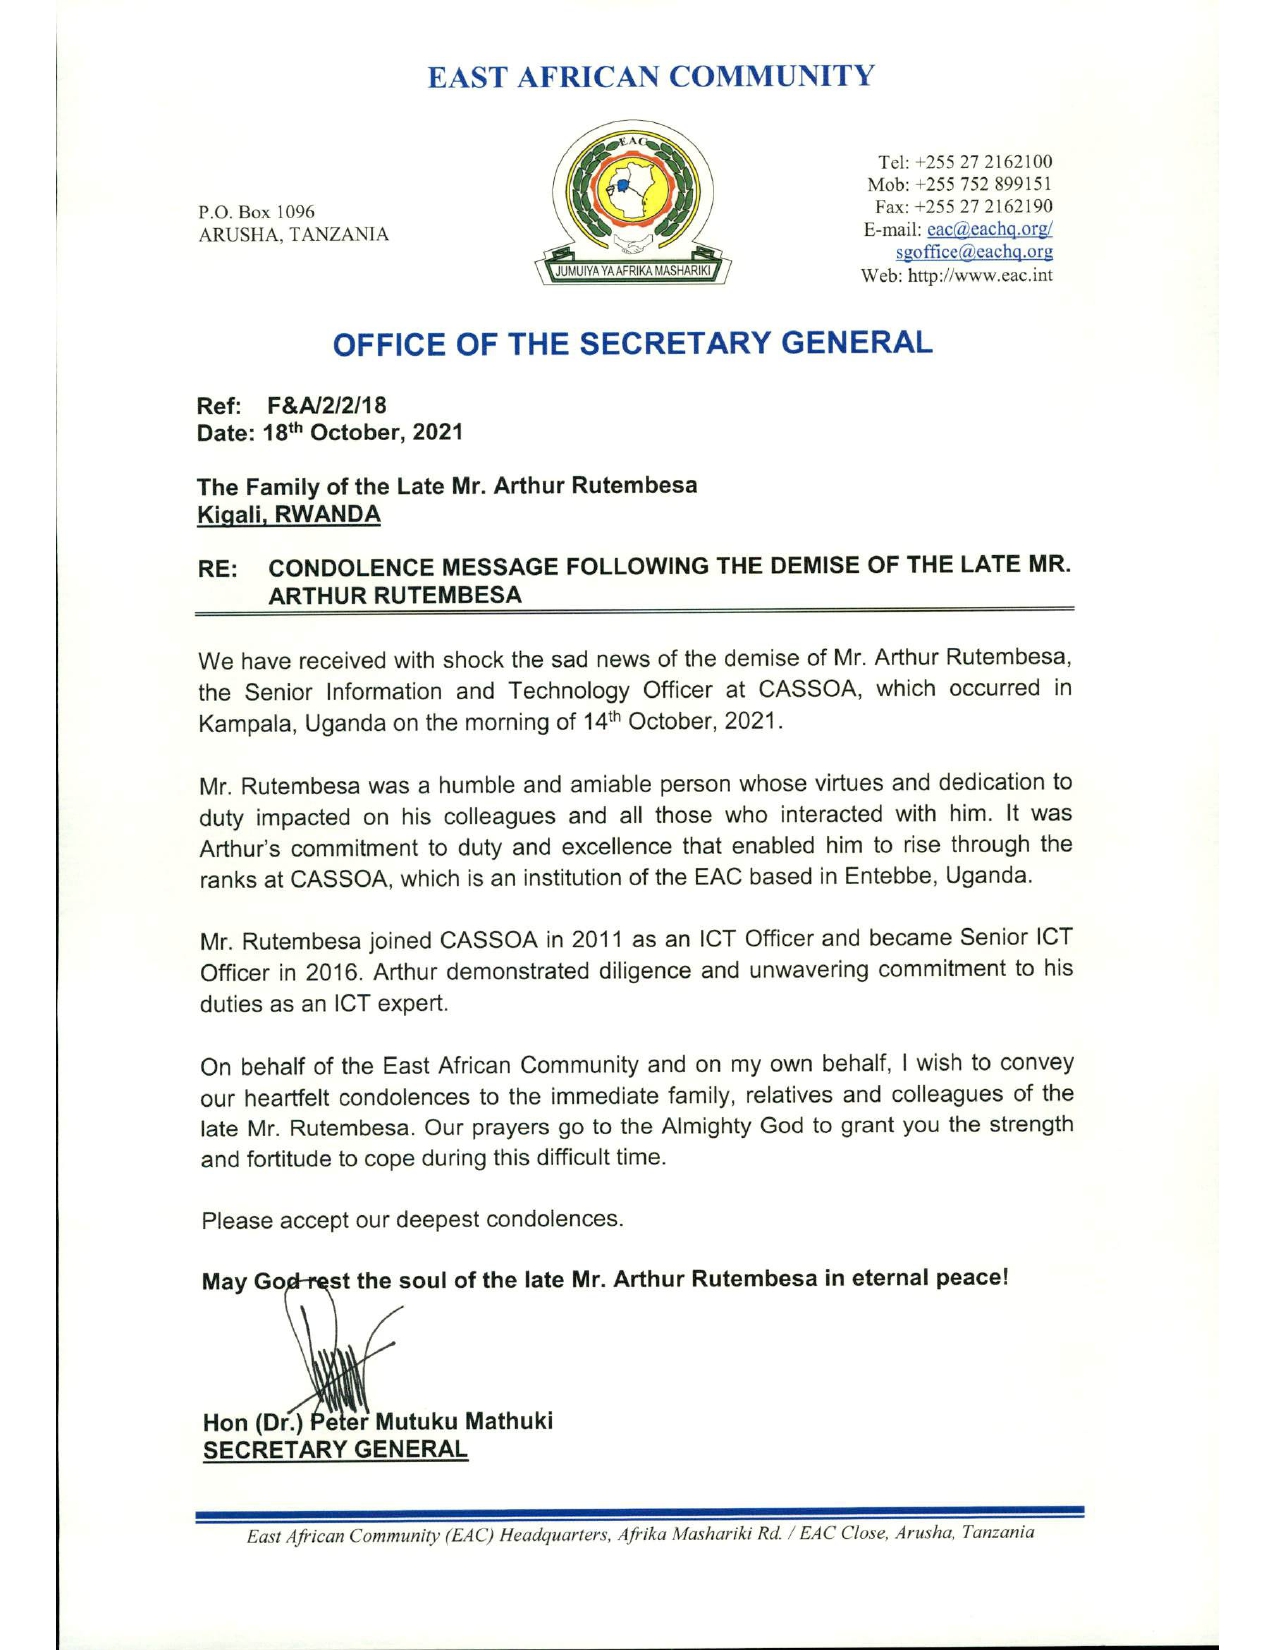 SGS CONDOLENCE MESSAGE ON THE DEMISE OF MR ARTHUR RUTEMBESA FORMER SENIOR ICT OFFICER AT CASSOA.jpg